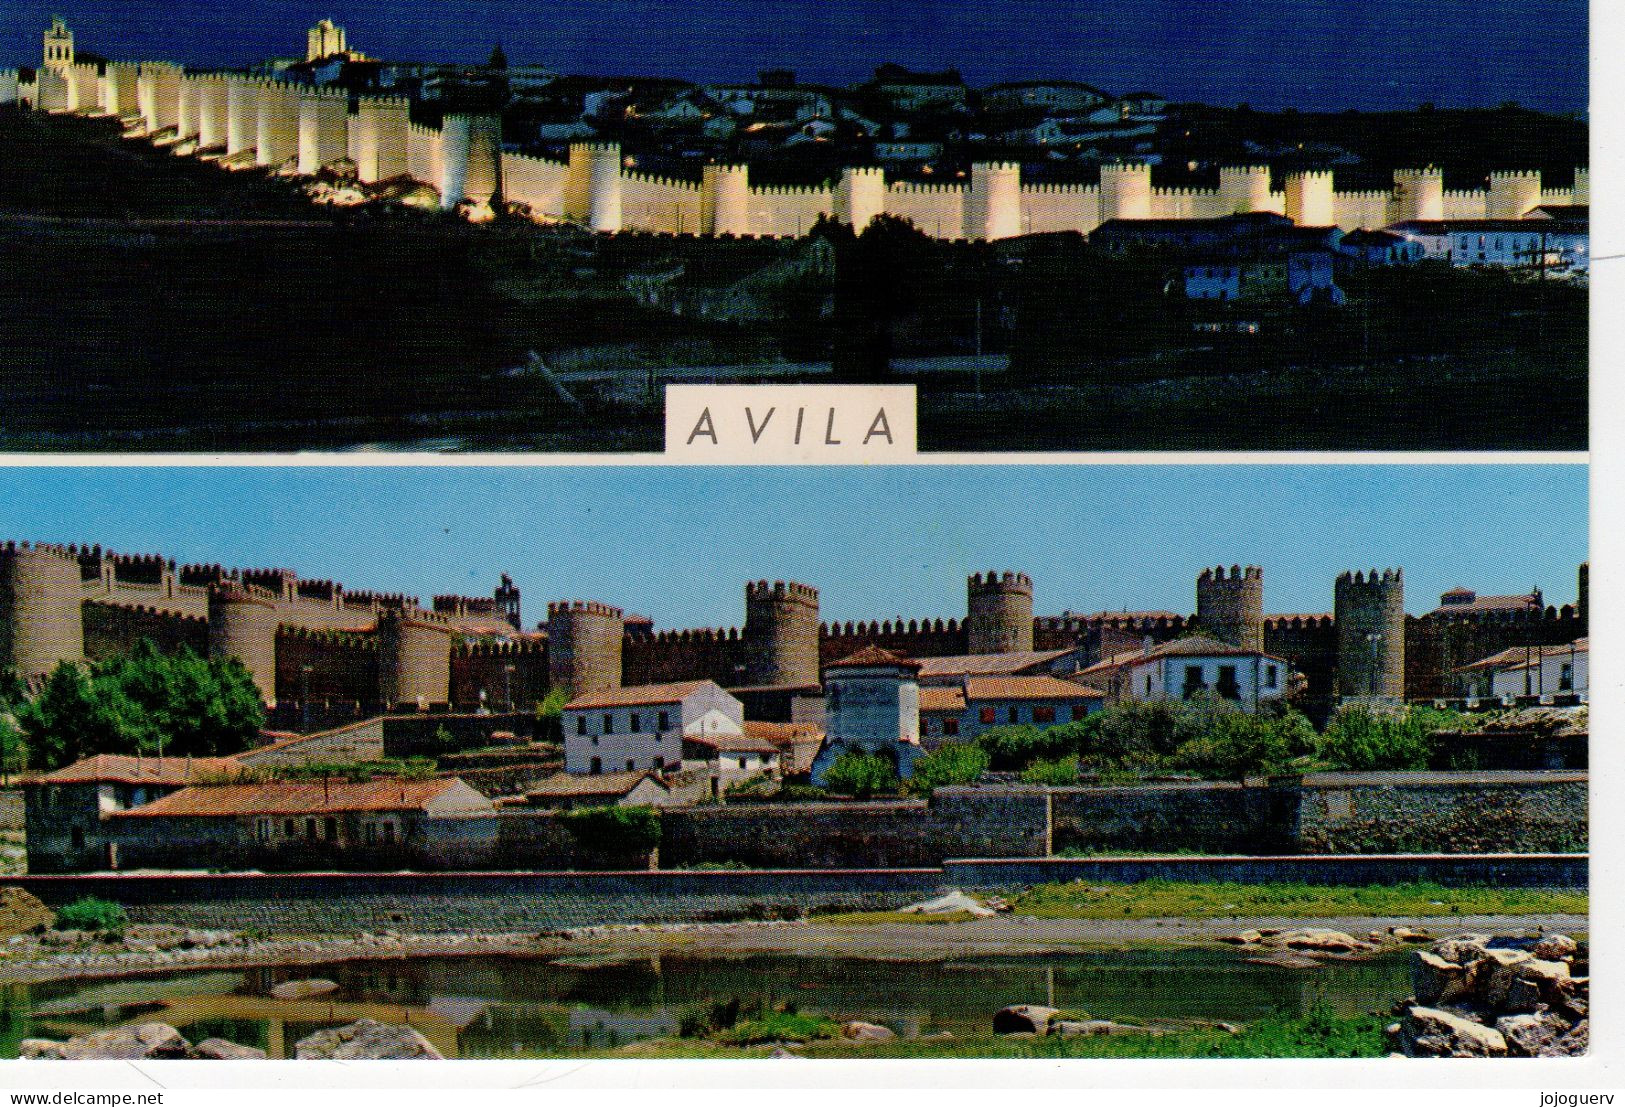 Avila Detalles De La Ciutad Détail De La Ville 2 Vues ( Citadelle - Ávila